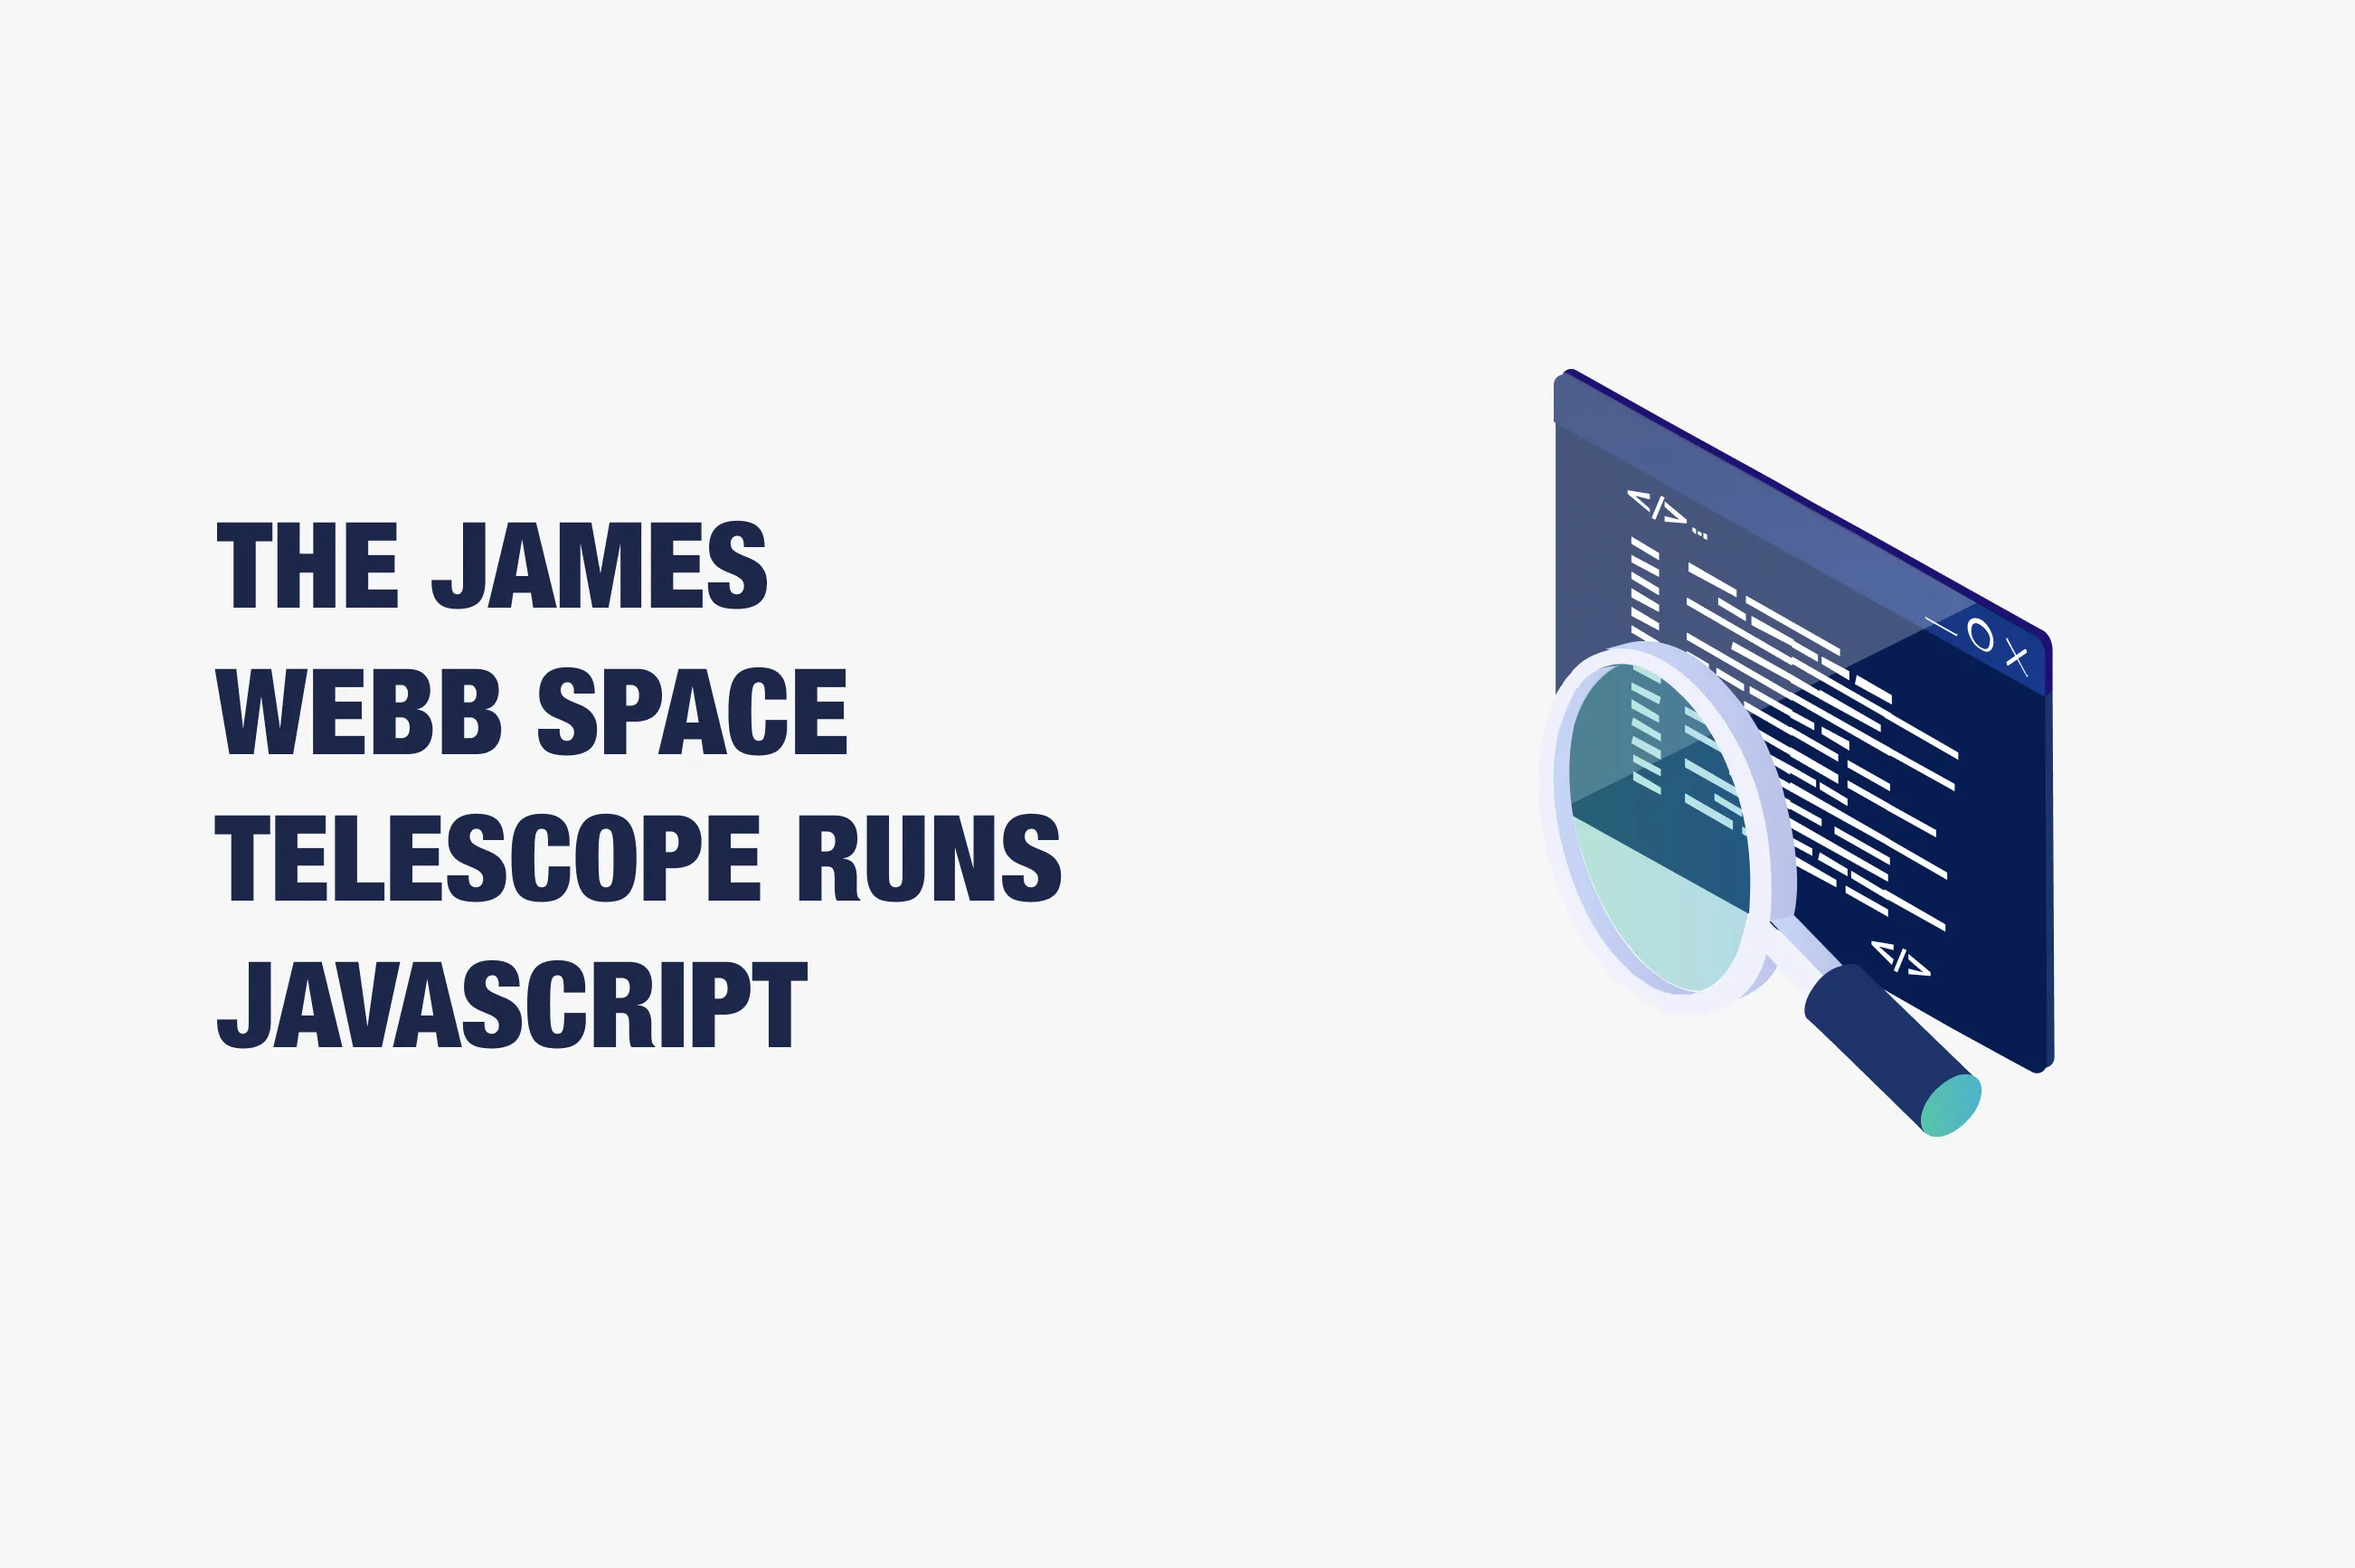 Why was JavaScript chosen for JWST?